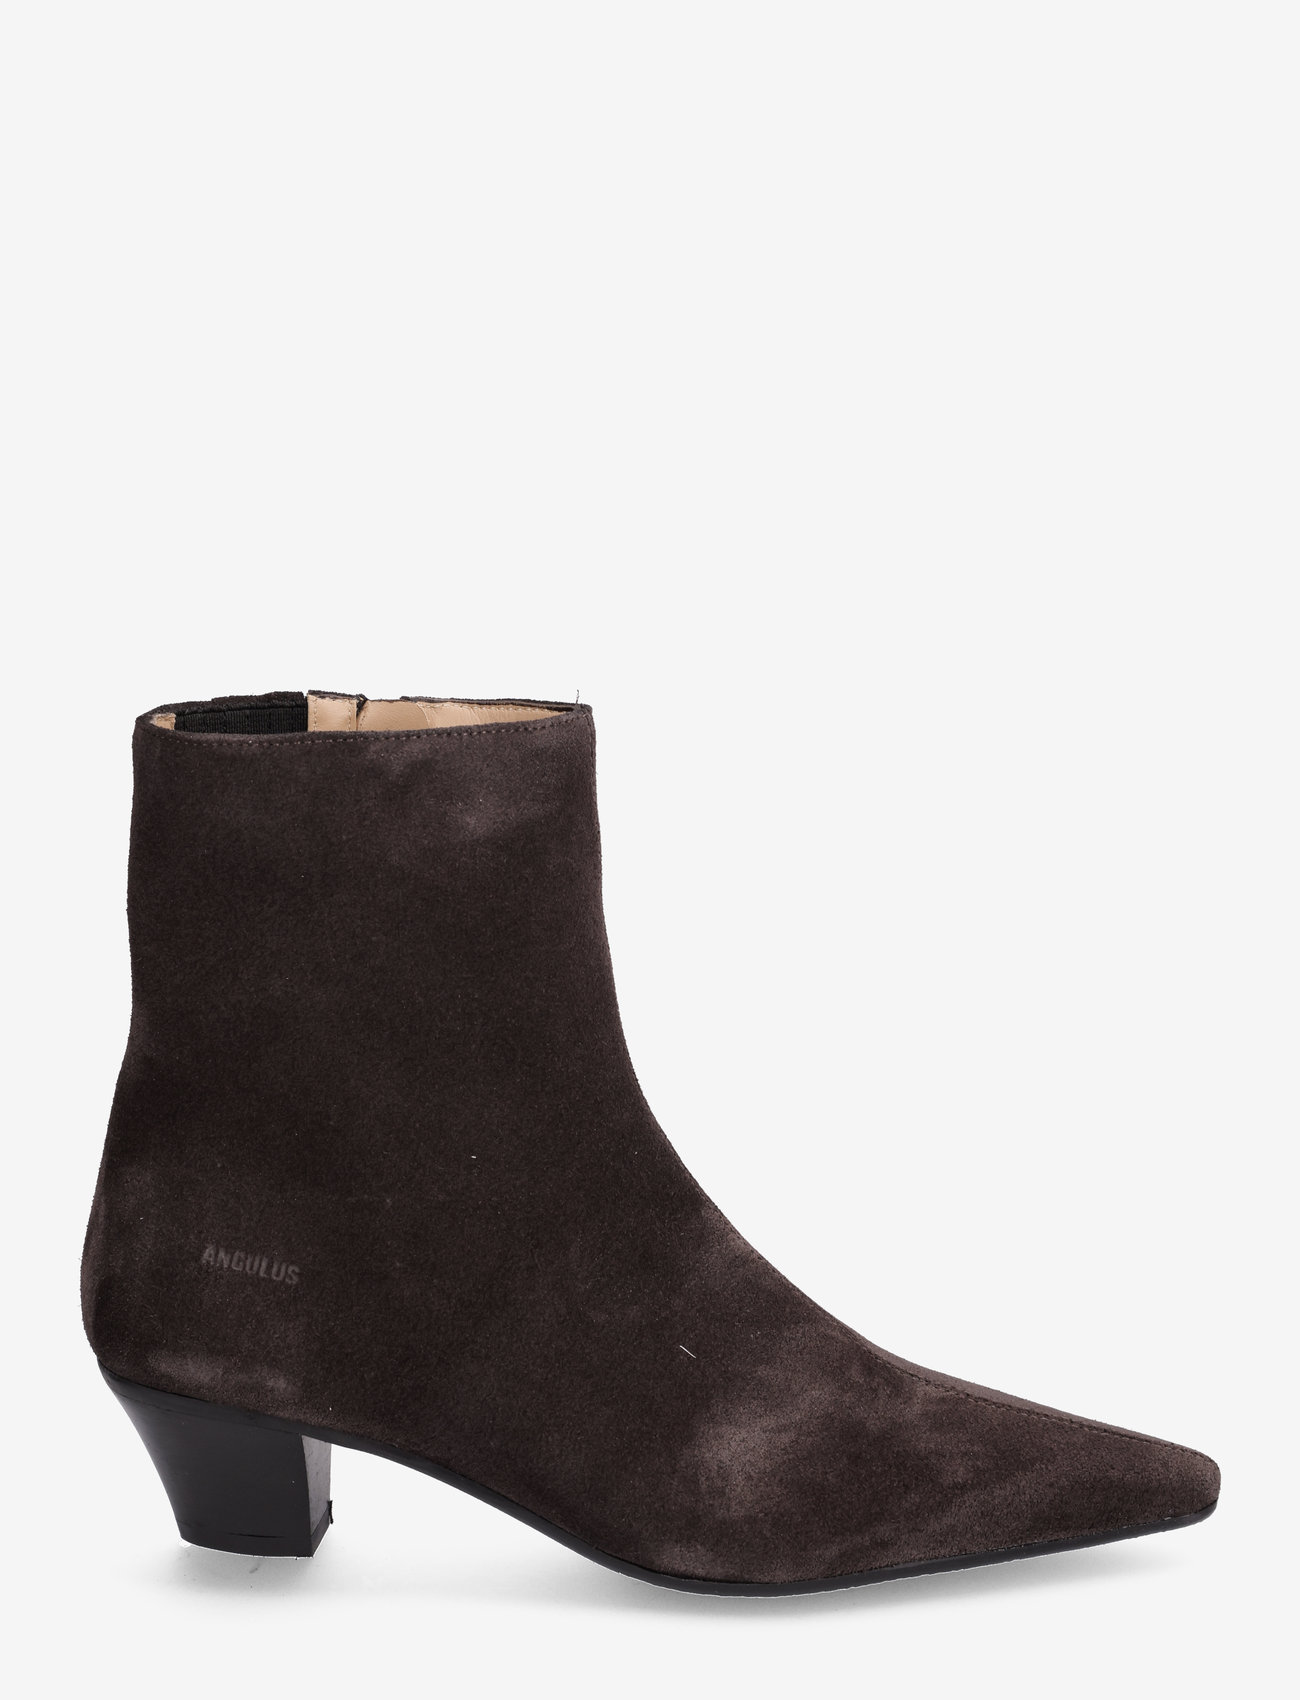 ANGULUS - Boots - Block heel with zipper - høj hæl - 1716/001 espresso - 1